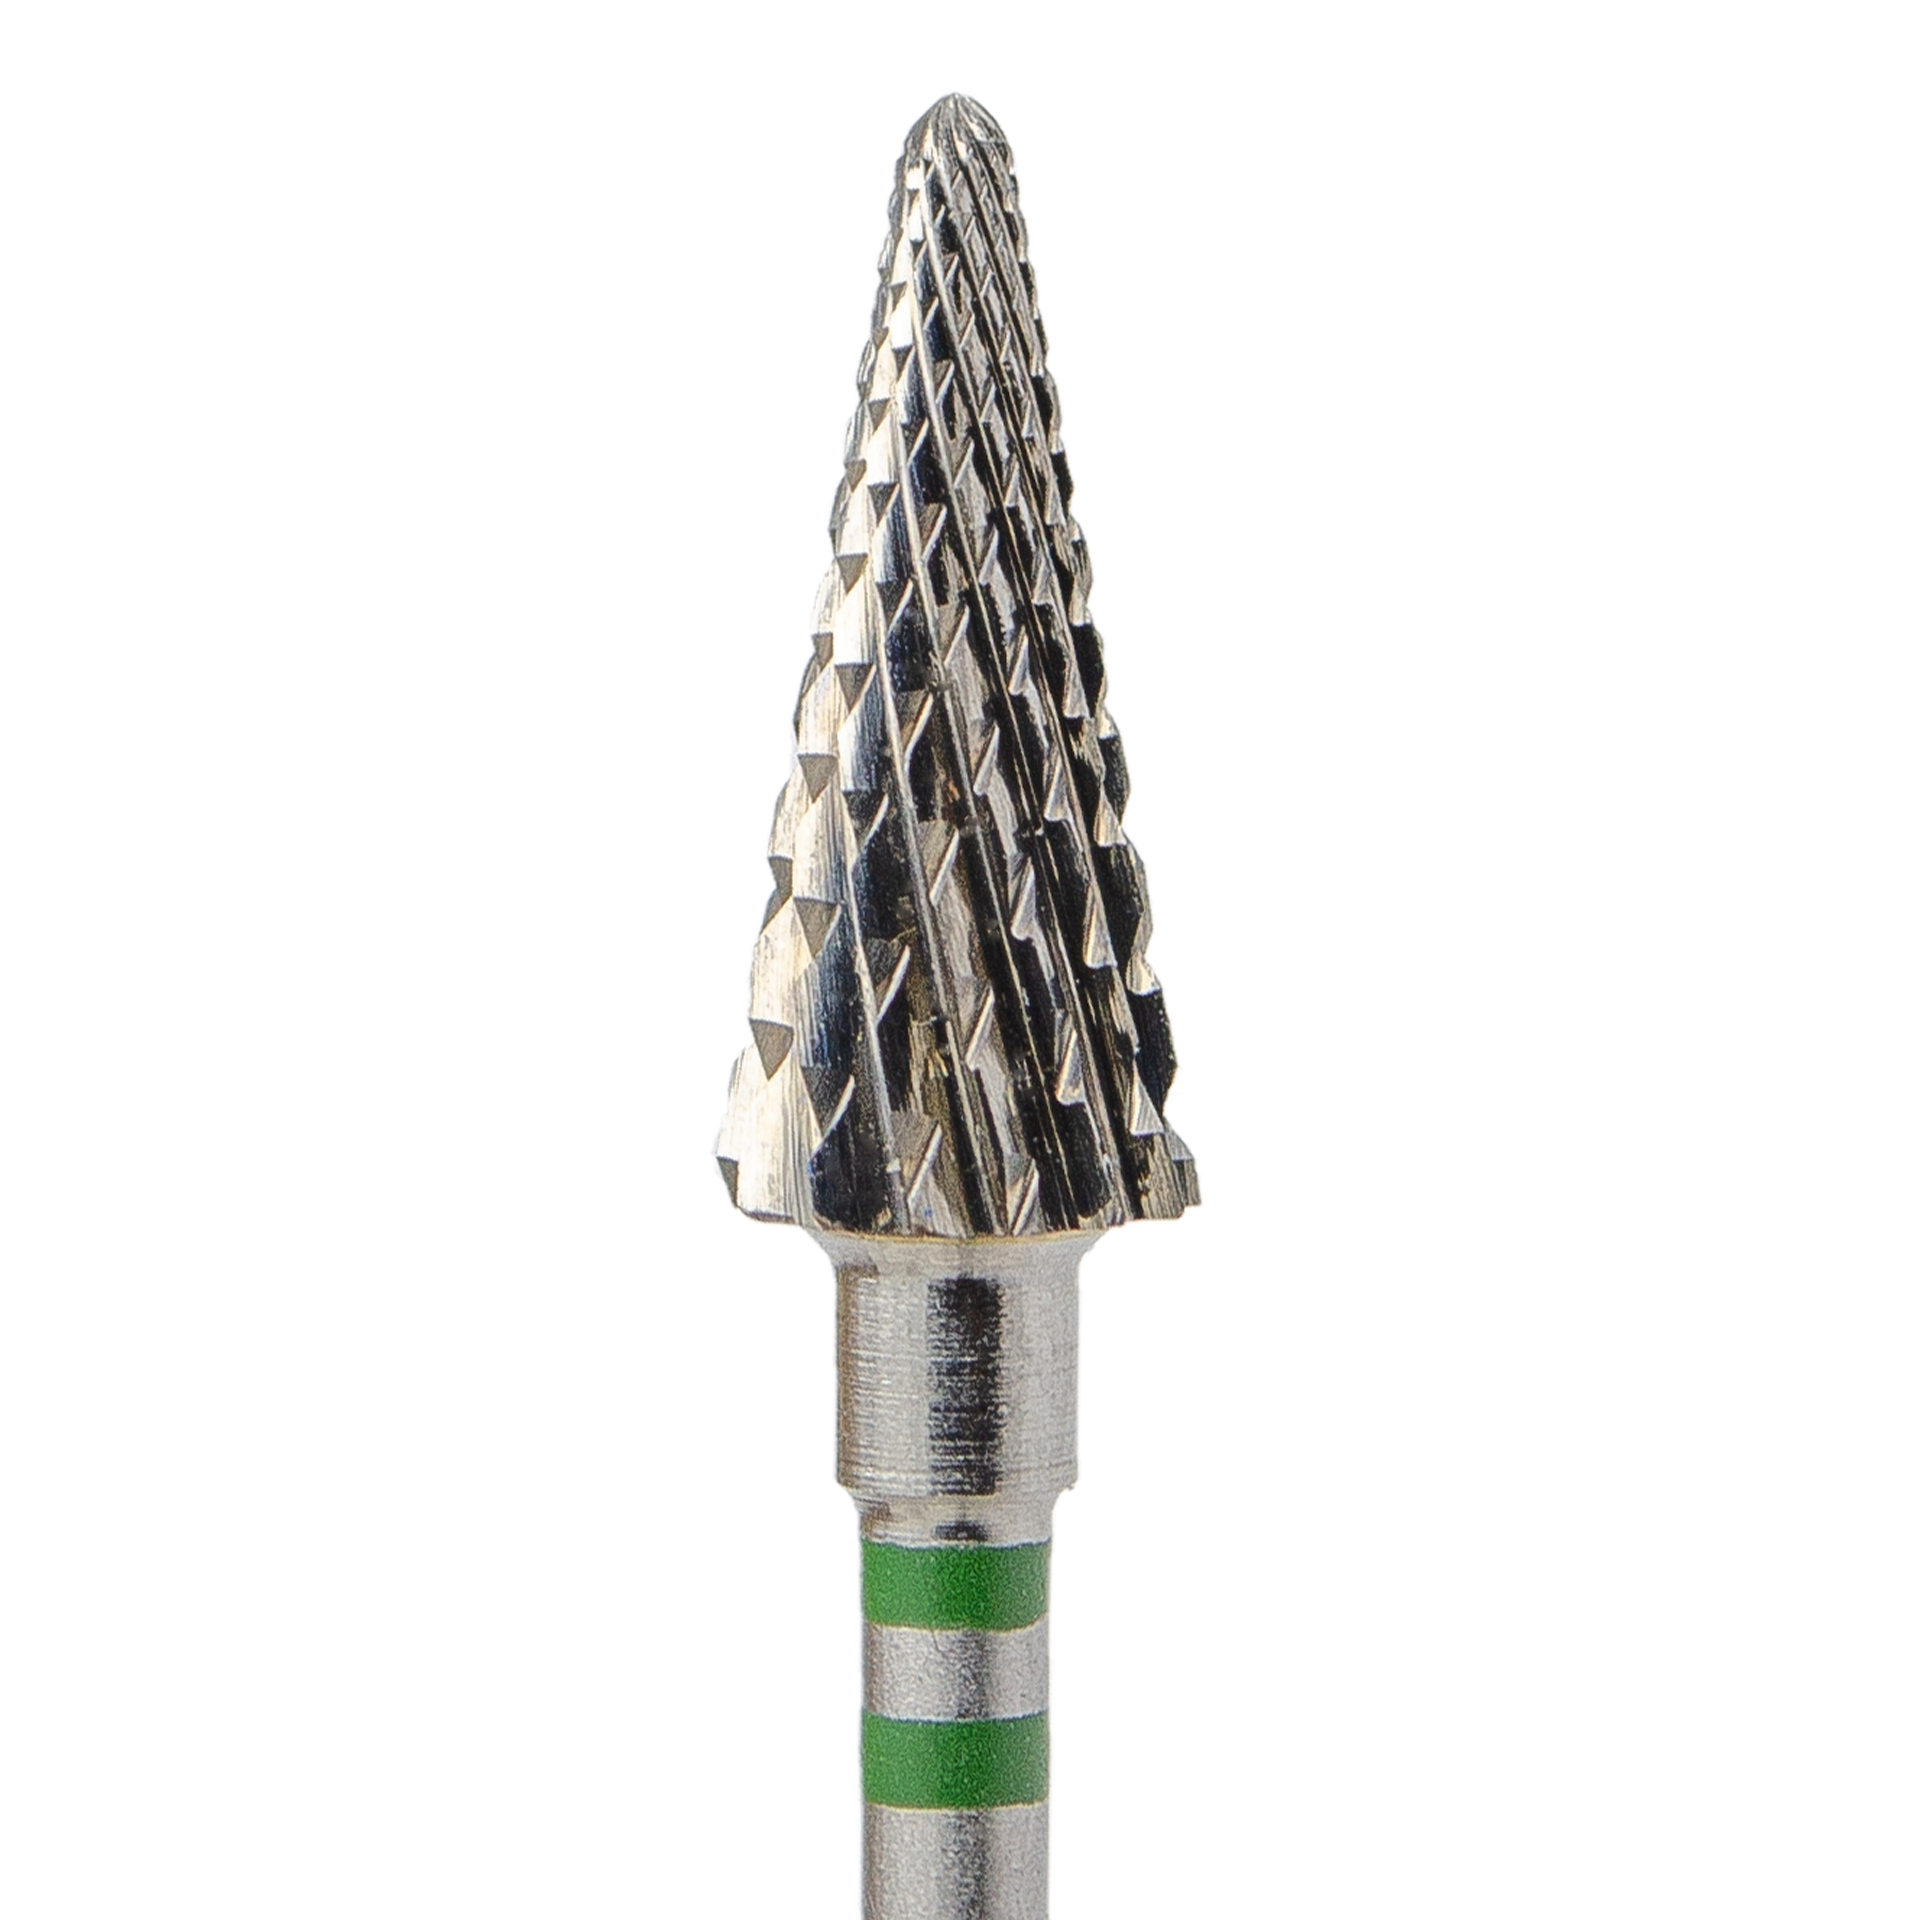 KMIZ Tungsten Carbide Cone E-File Nail Bit, 6.0mm, Green, LEFT handed